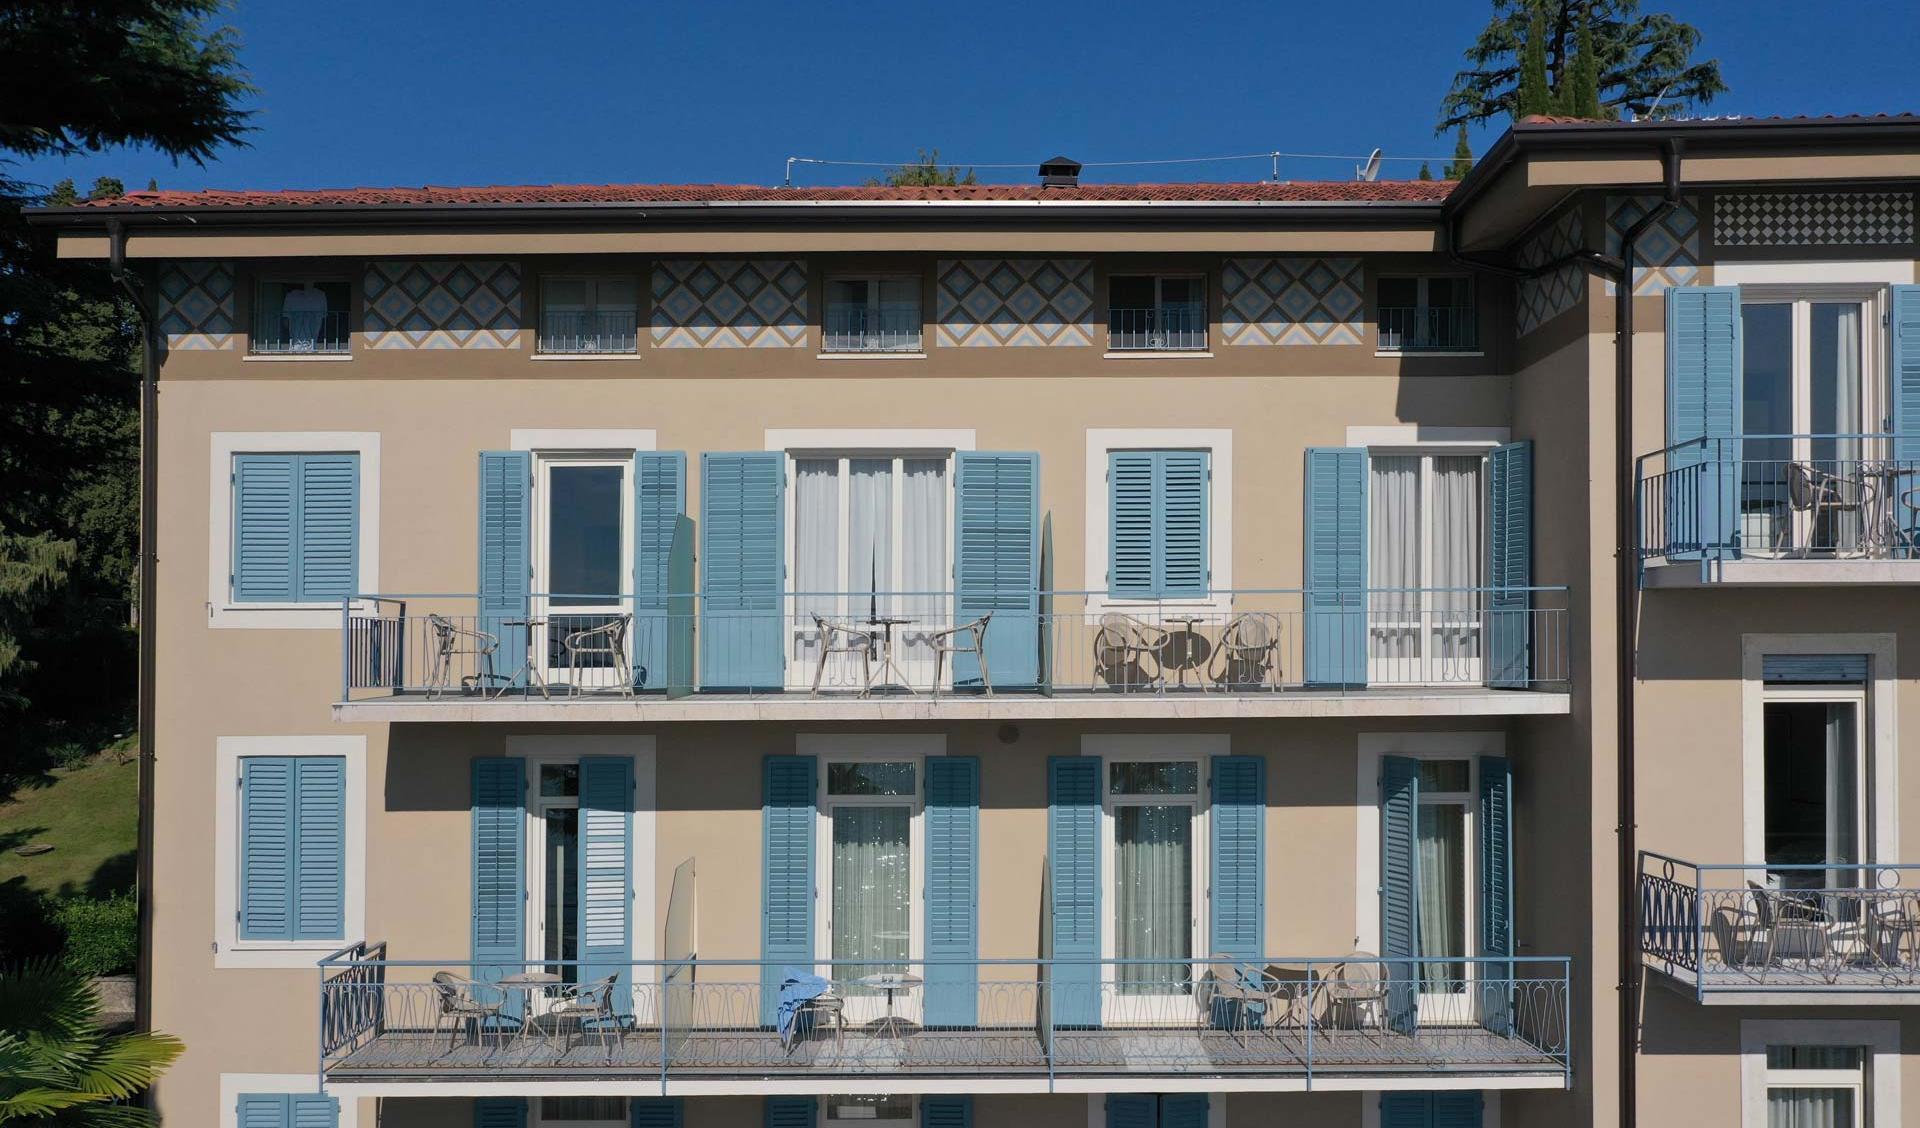 Hotel Montebaldo Gardone Riviera